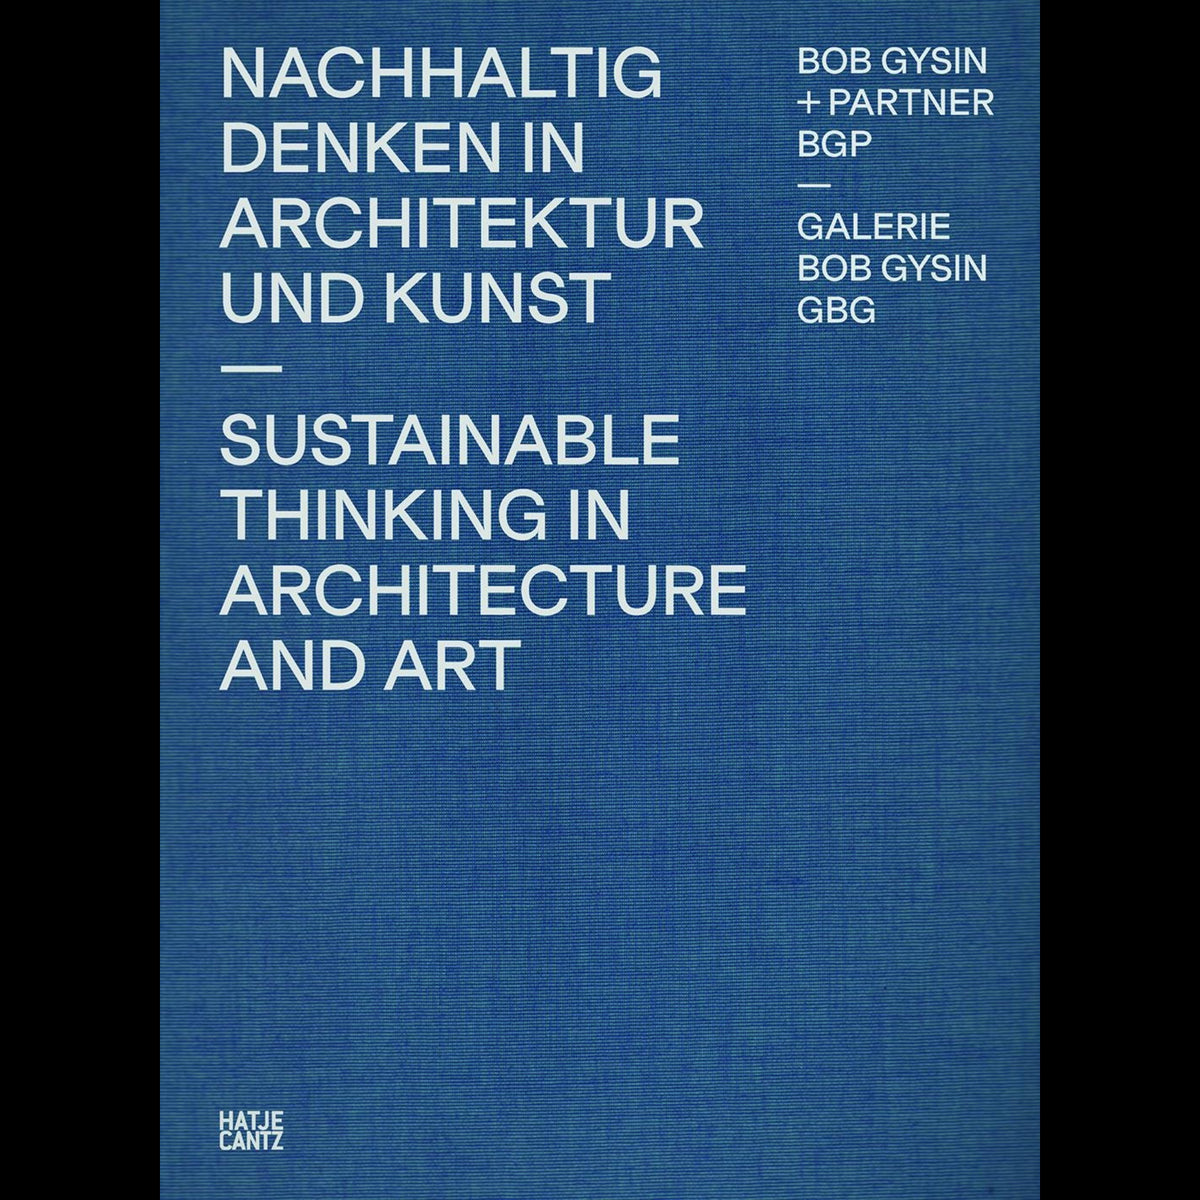 Coverbild Bob Gysin + Partner BGP Architekten